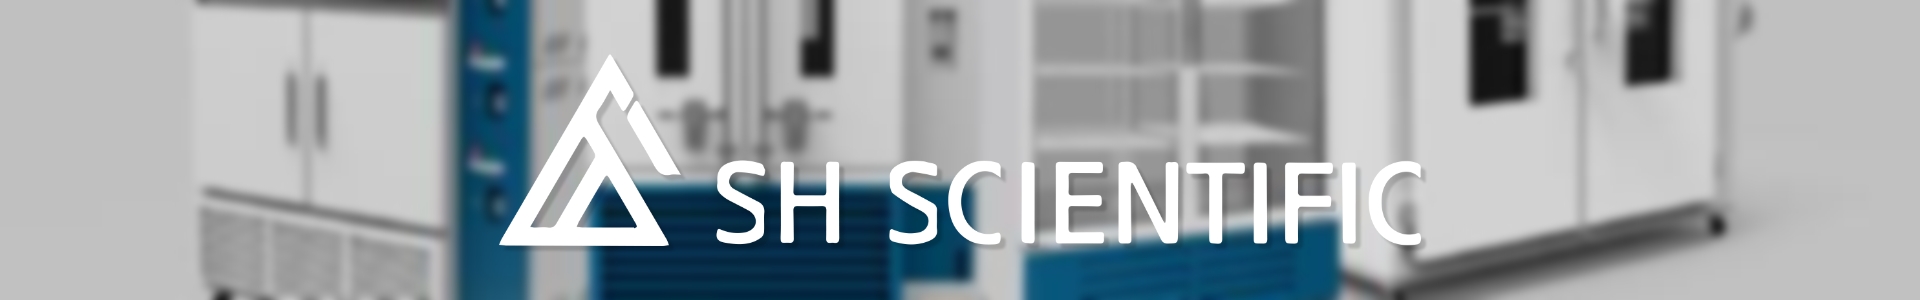 sh scientific brand - Tủ ấm SH SCIENTIFIC